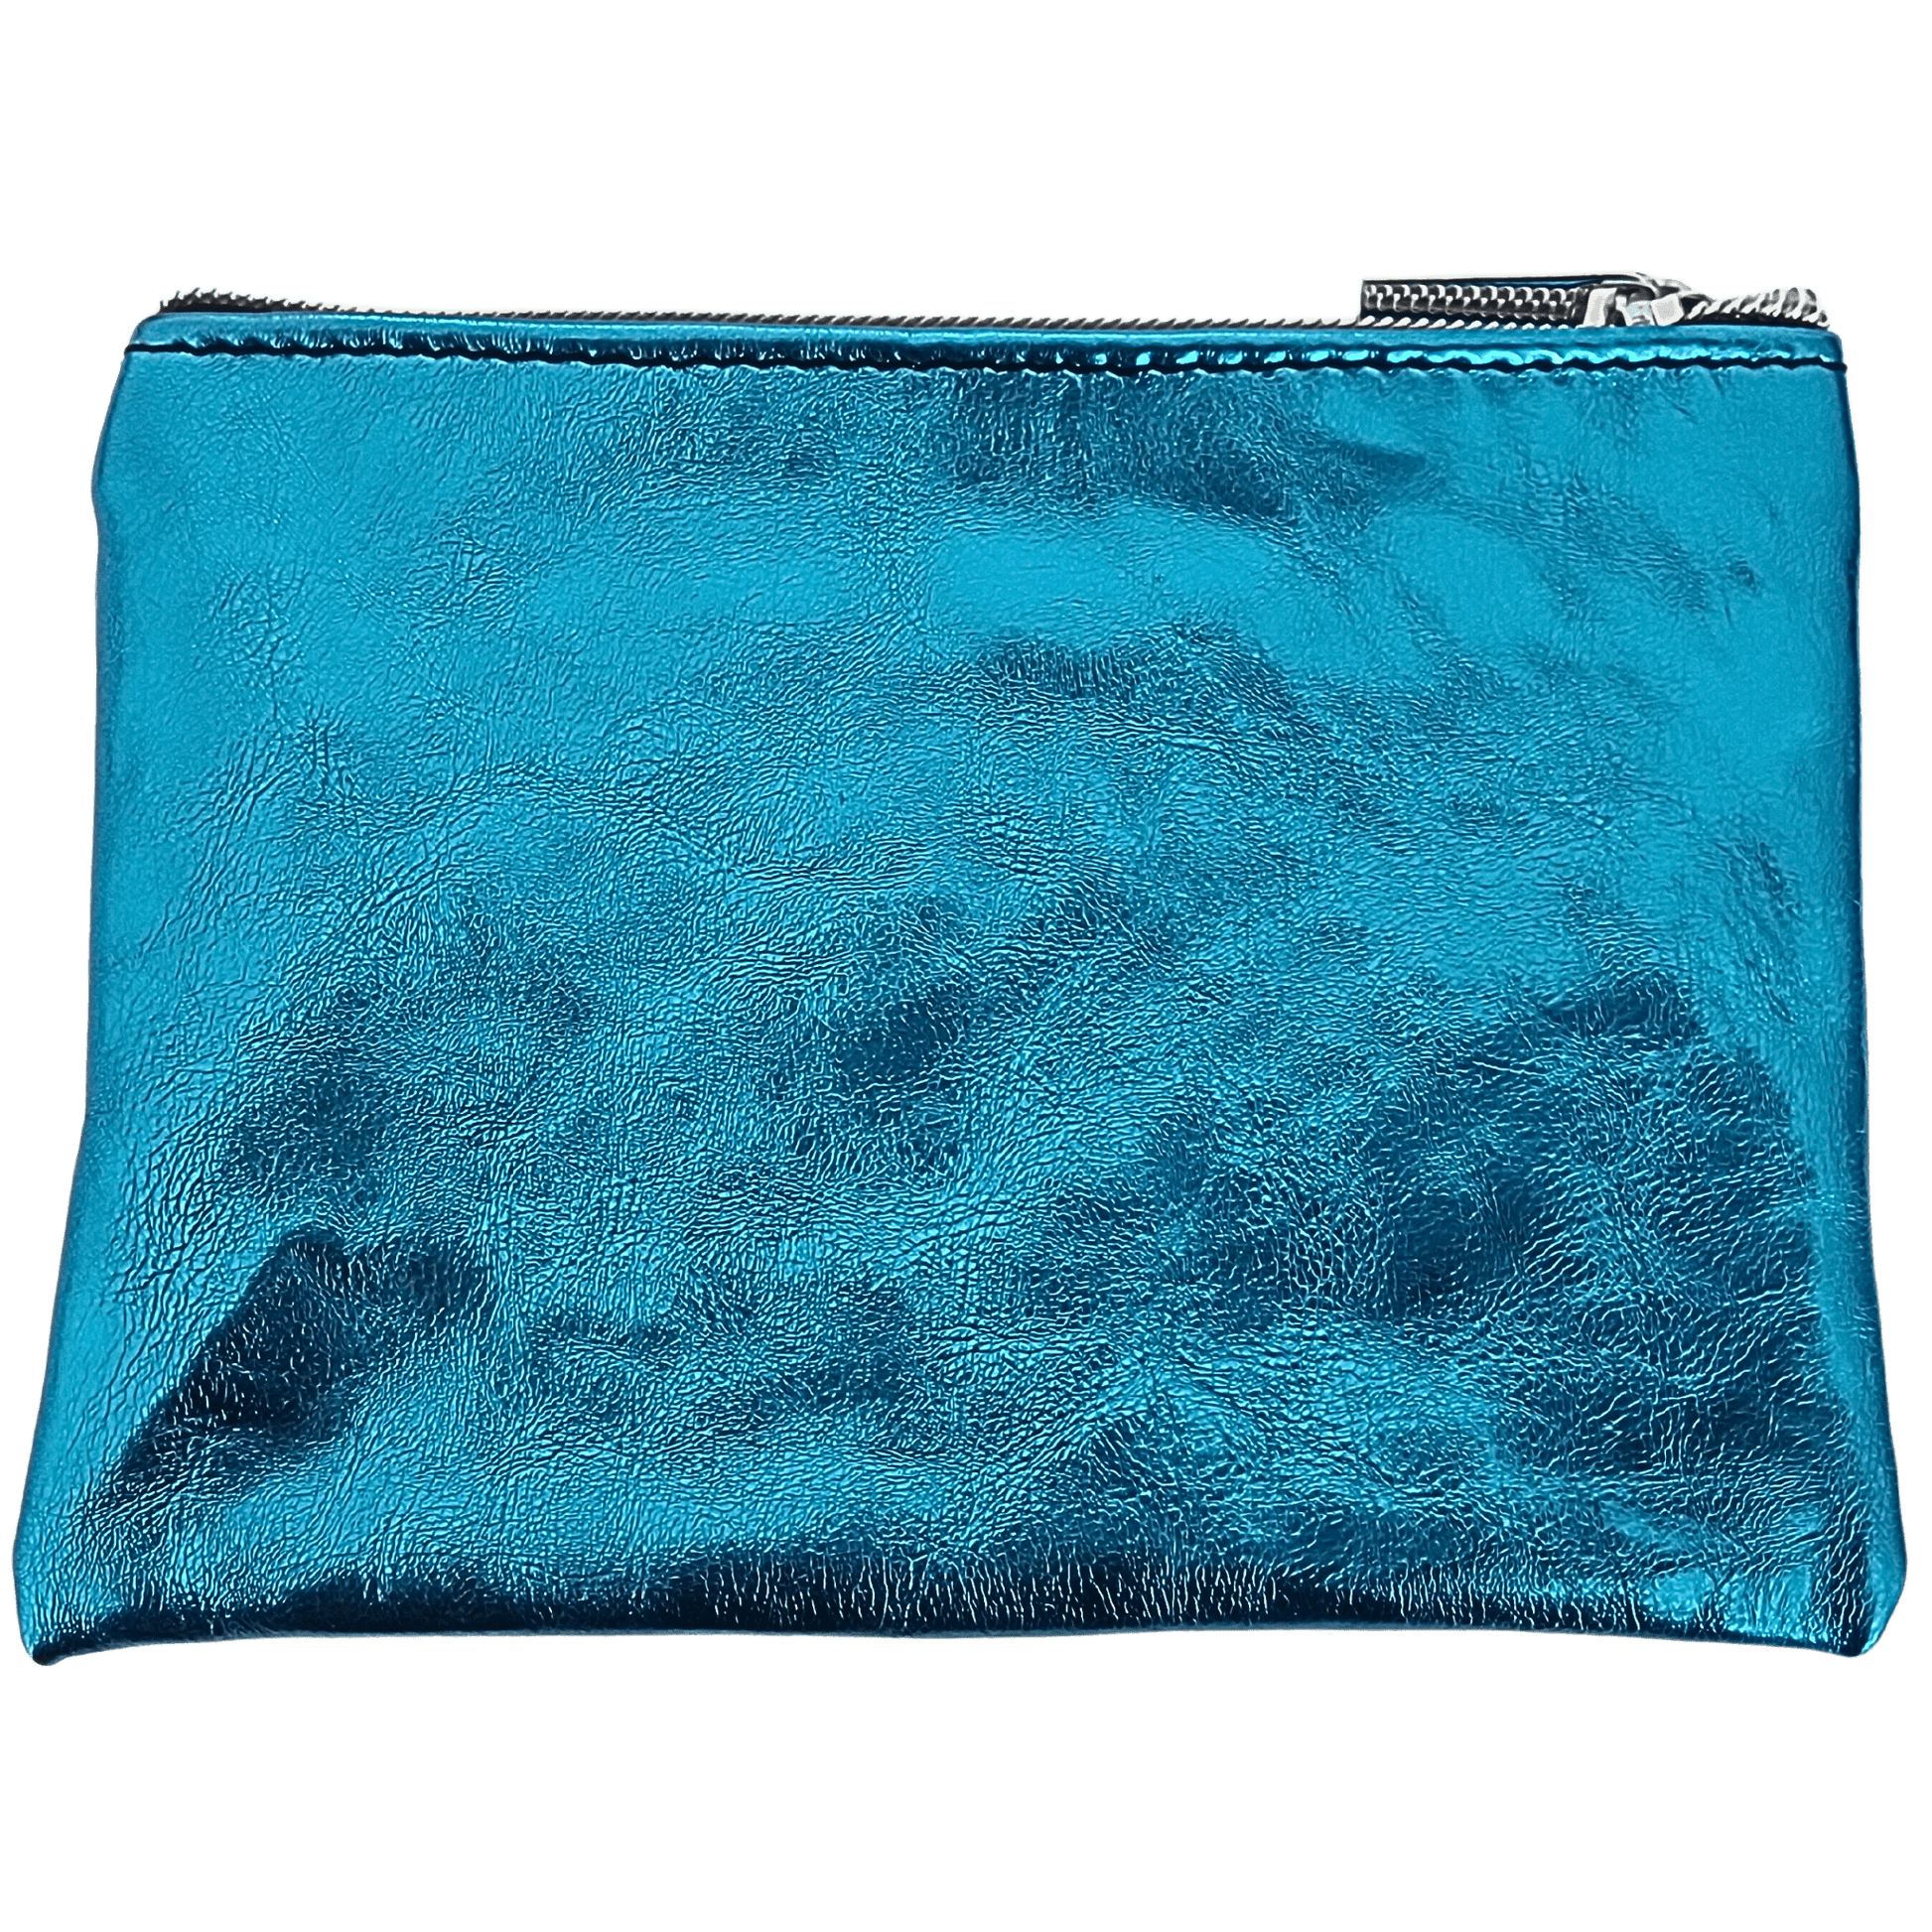 Pochette en cuir Bleu métallisé Lisa - Vavounette&Co